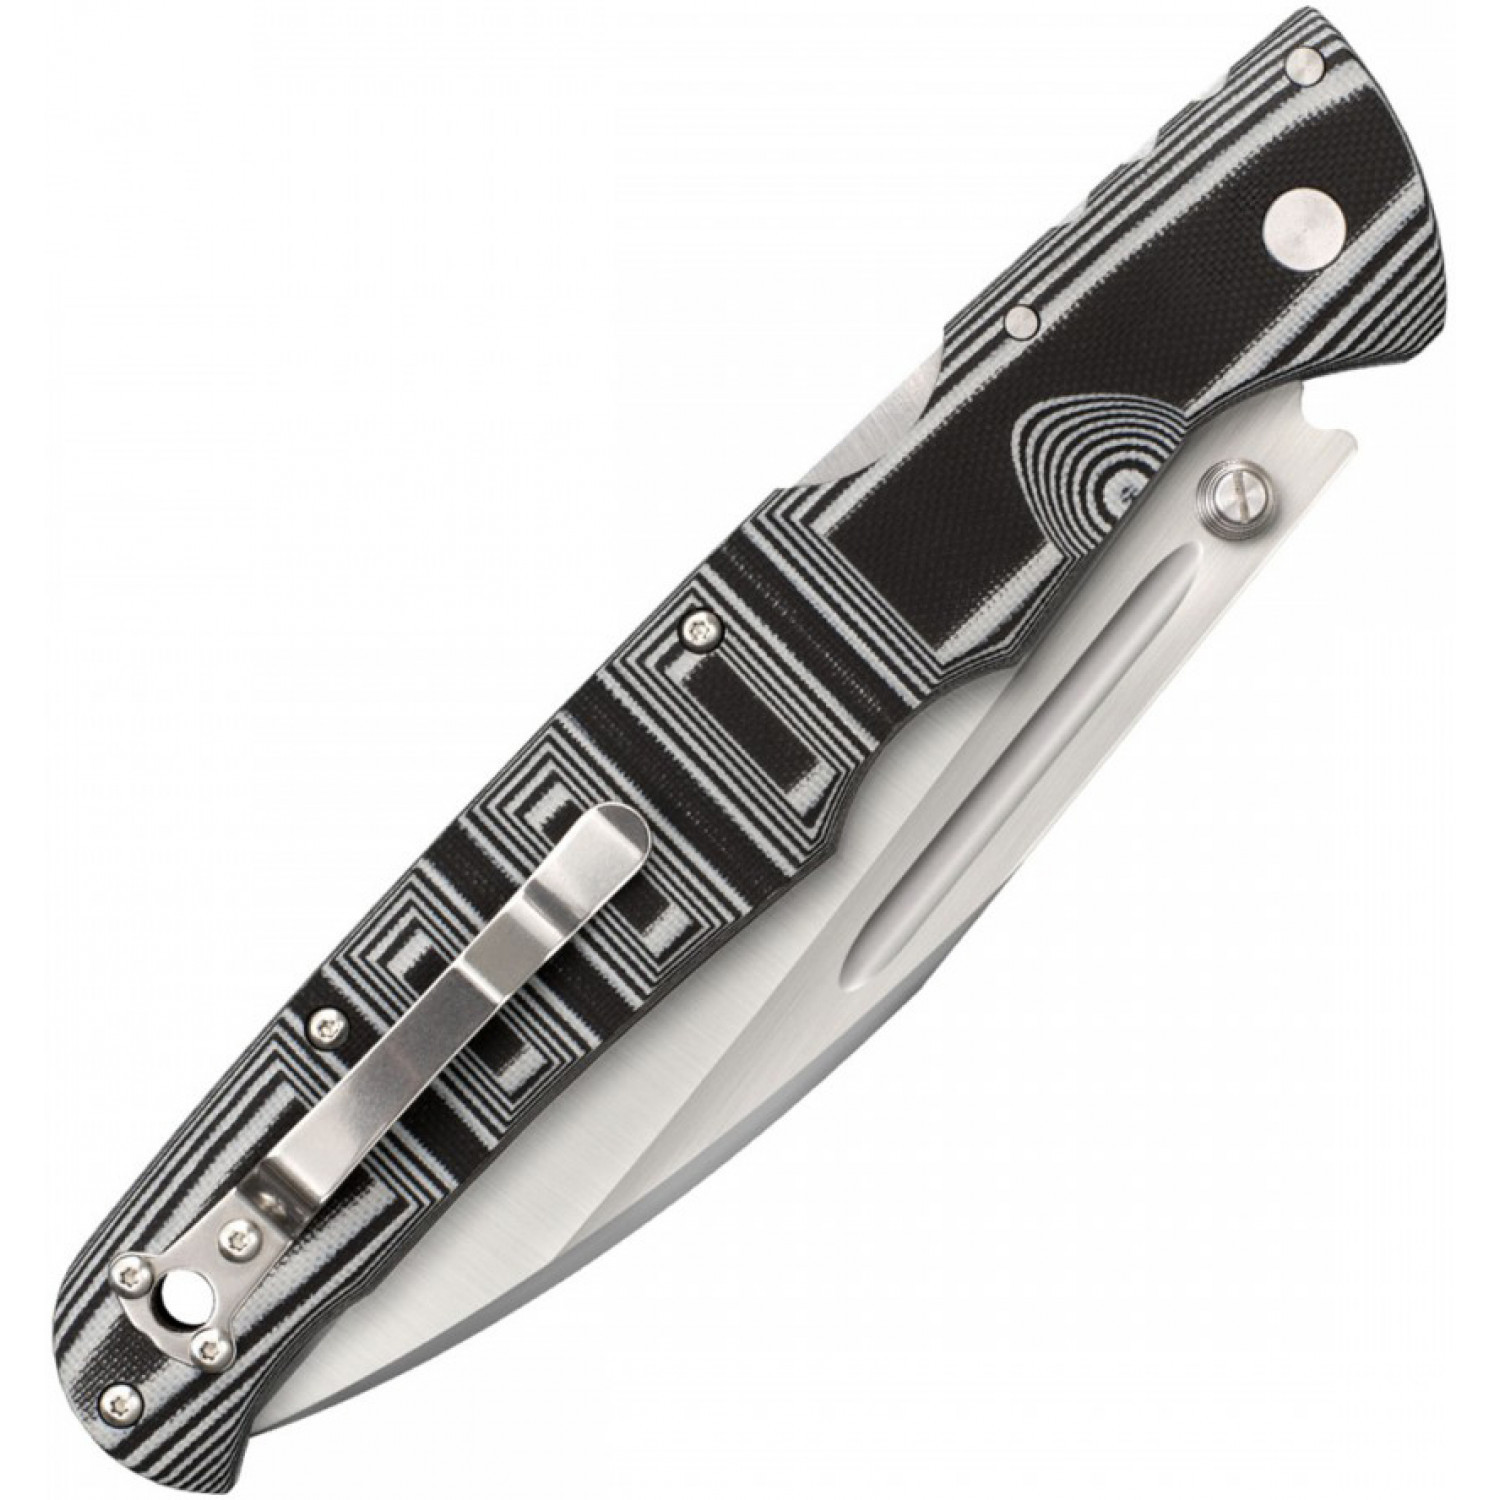 Складной нож Frenzy III (Gray/Black) - Cold Steel 62PV3, сталь CTS-XHP, рукоять G10 - фото 2